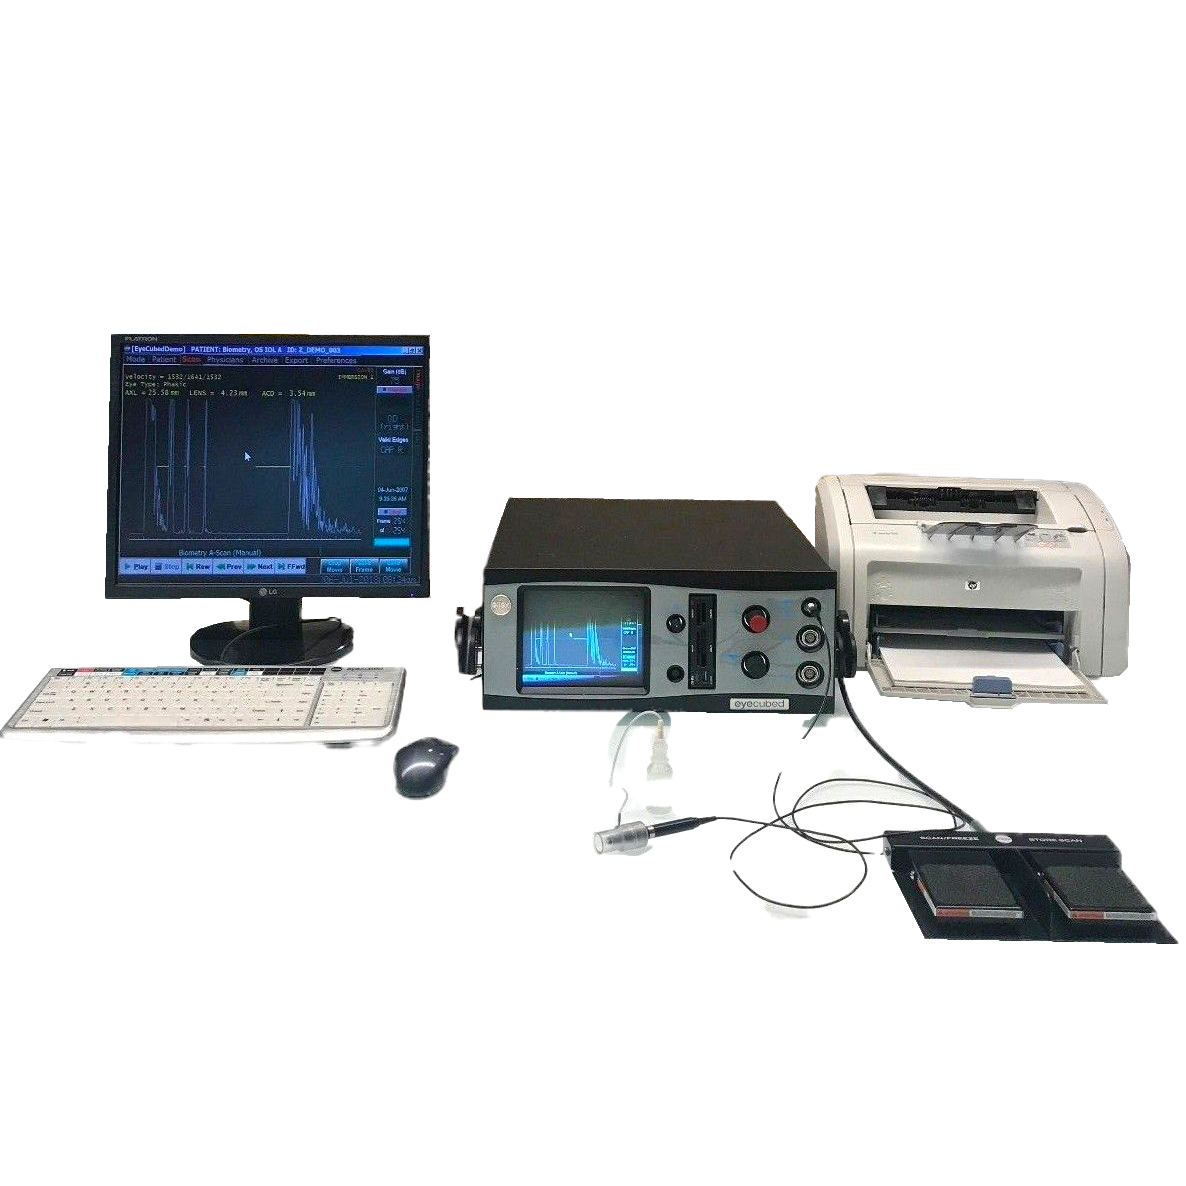 ELLEX Eyecubed I3 A Scan w Printer Keyboard Footswitch Probe P2000T Surgical Pachymeter w/50MHz Probe